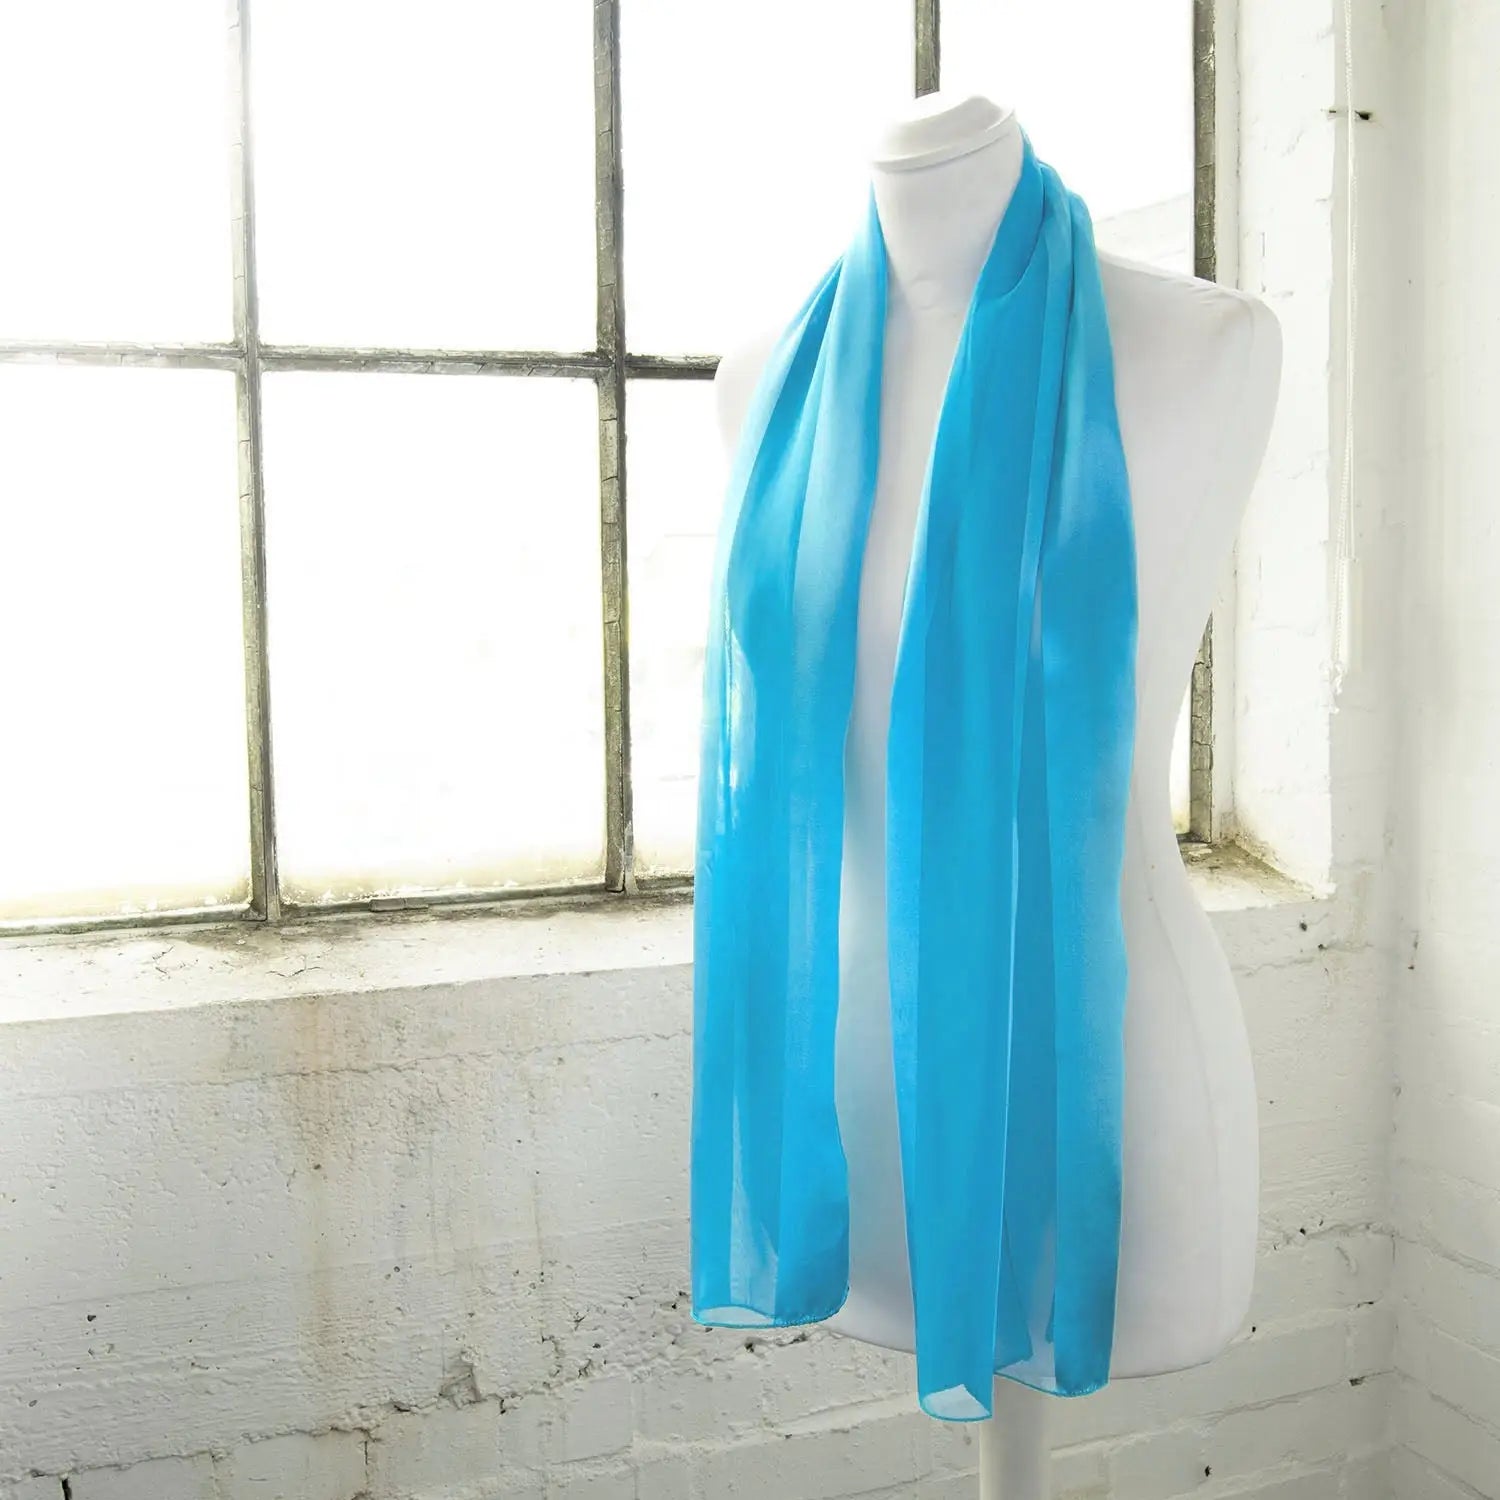 Blue satin stripe scarf elegantly displayed on white mannequin